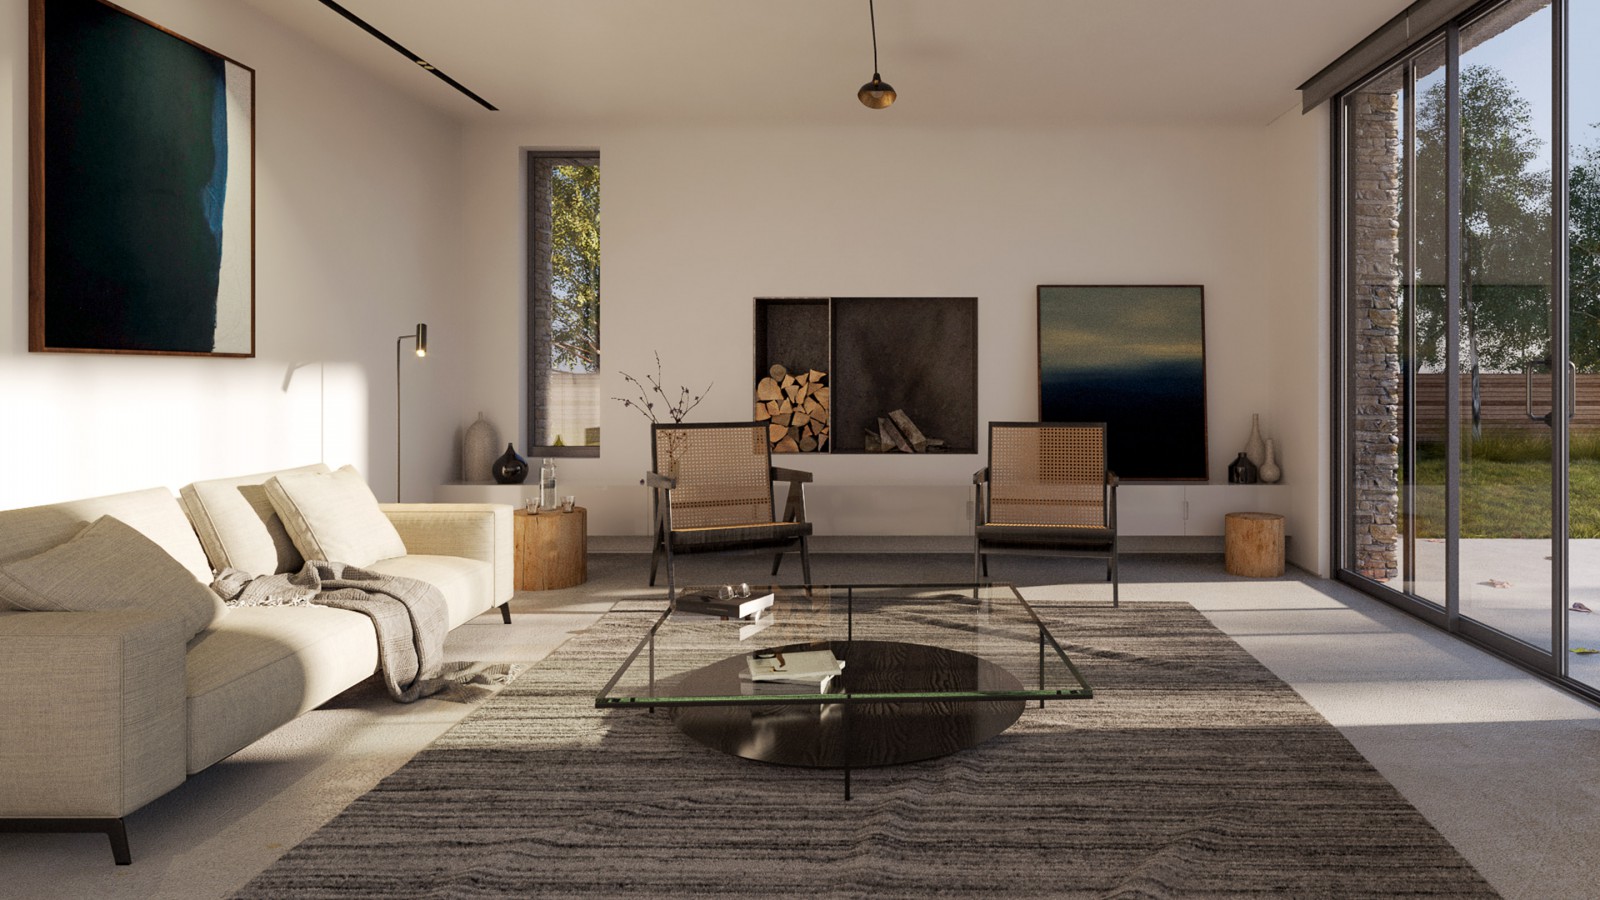 08 new home design contemporary living space north devon